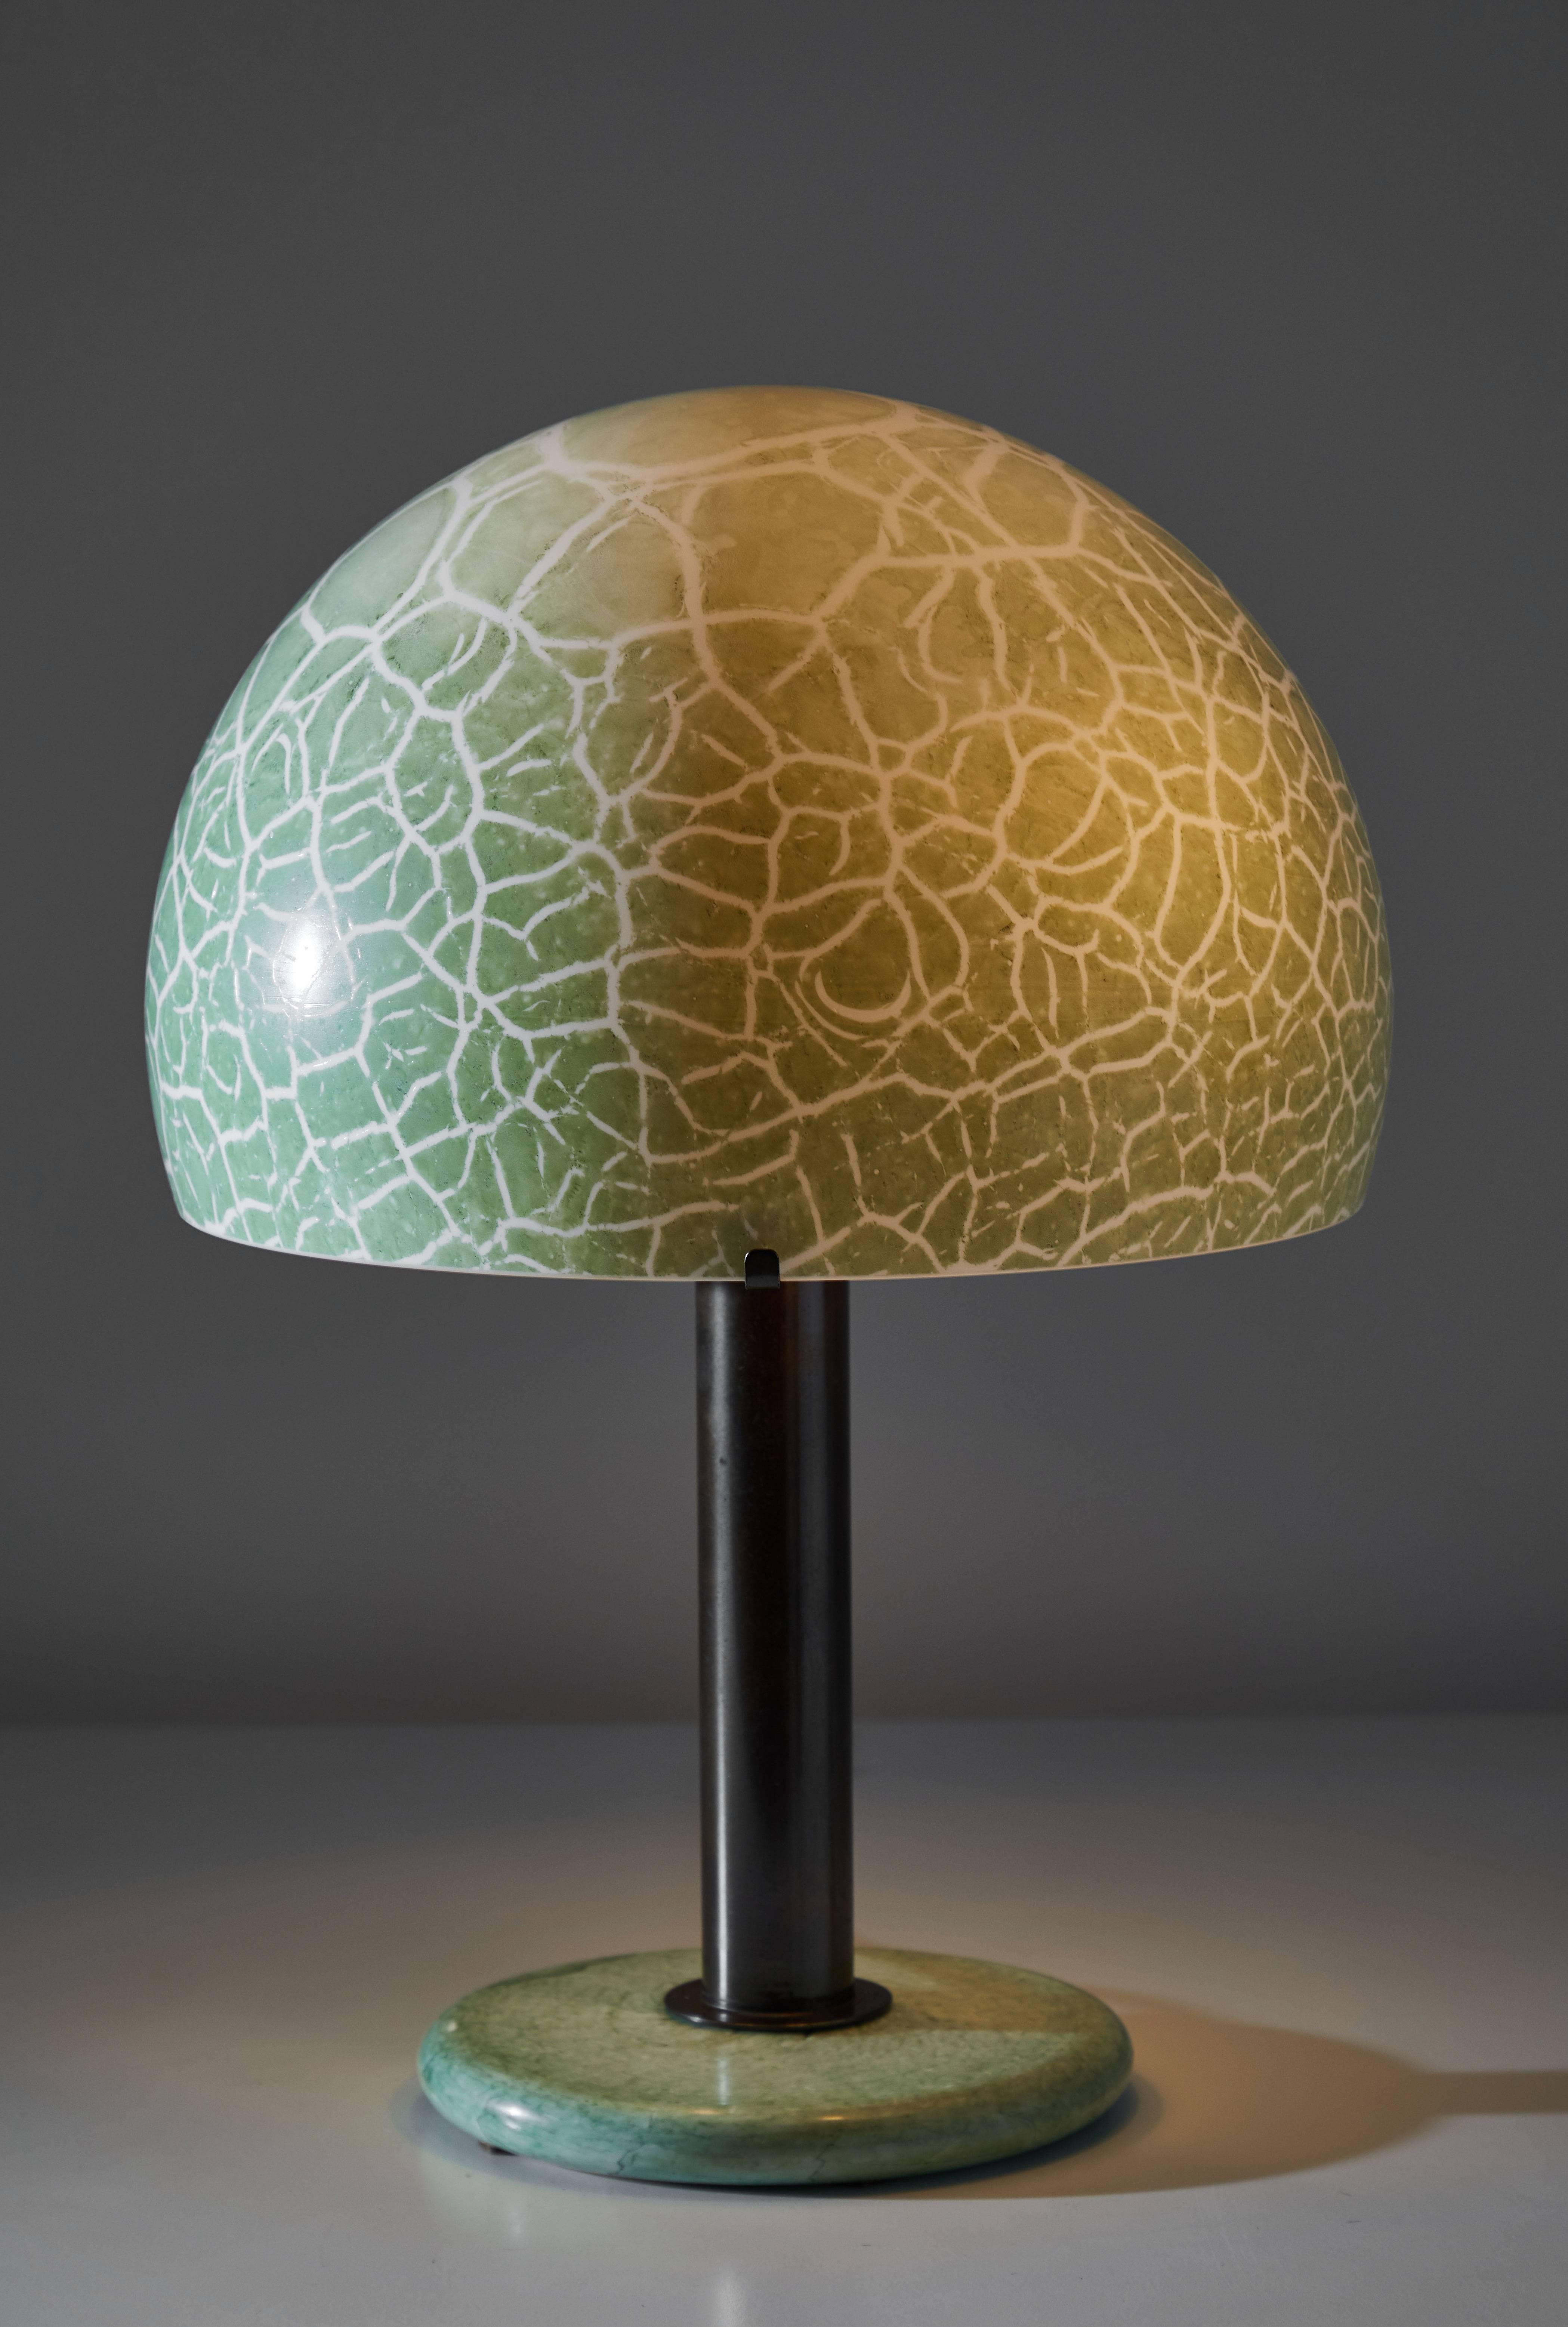 Model 832 table lamp by Venini. Manufactured in Italy, circa 1960s. Alabastro glass shade and base, bronzed metal stem. Takes one E27 100w. Literature: Franco Deboni, Venini Glass vol 1. Turin, 2007 p. 247.